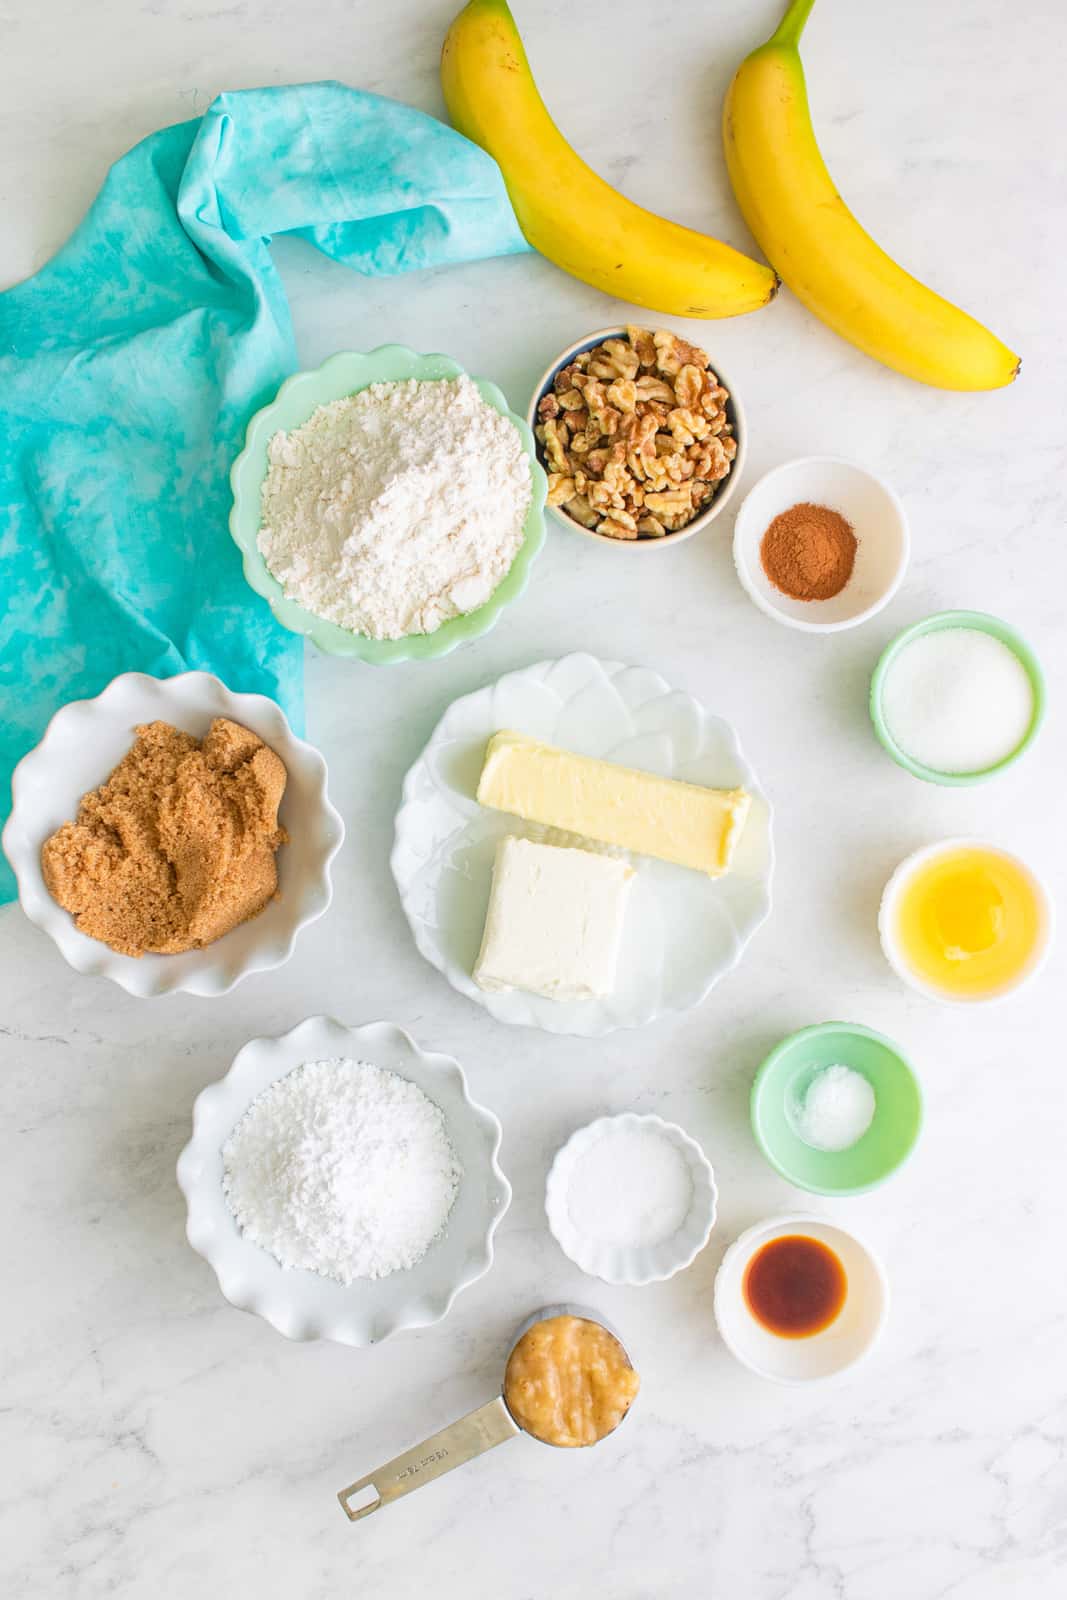 Ingredients needed to make Banana Cookies